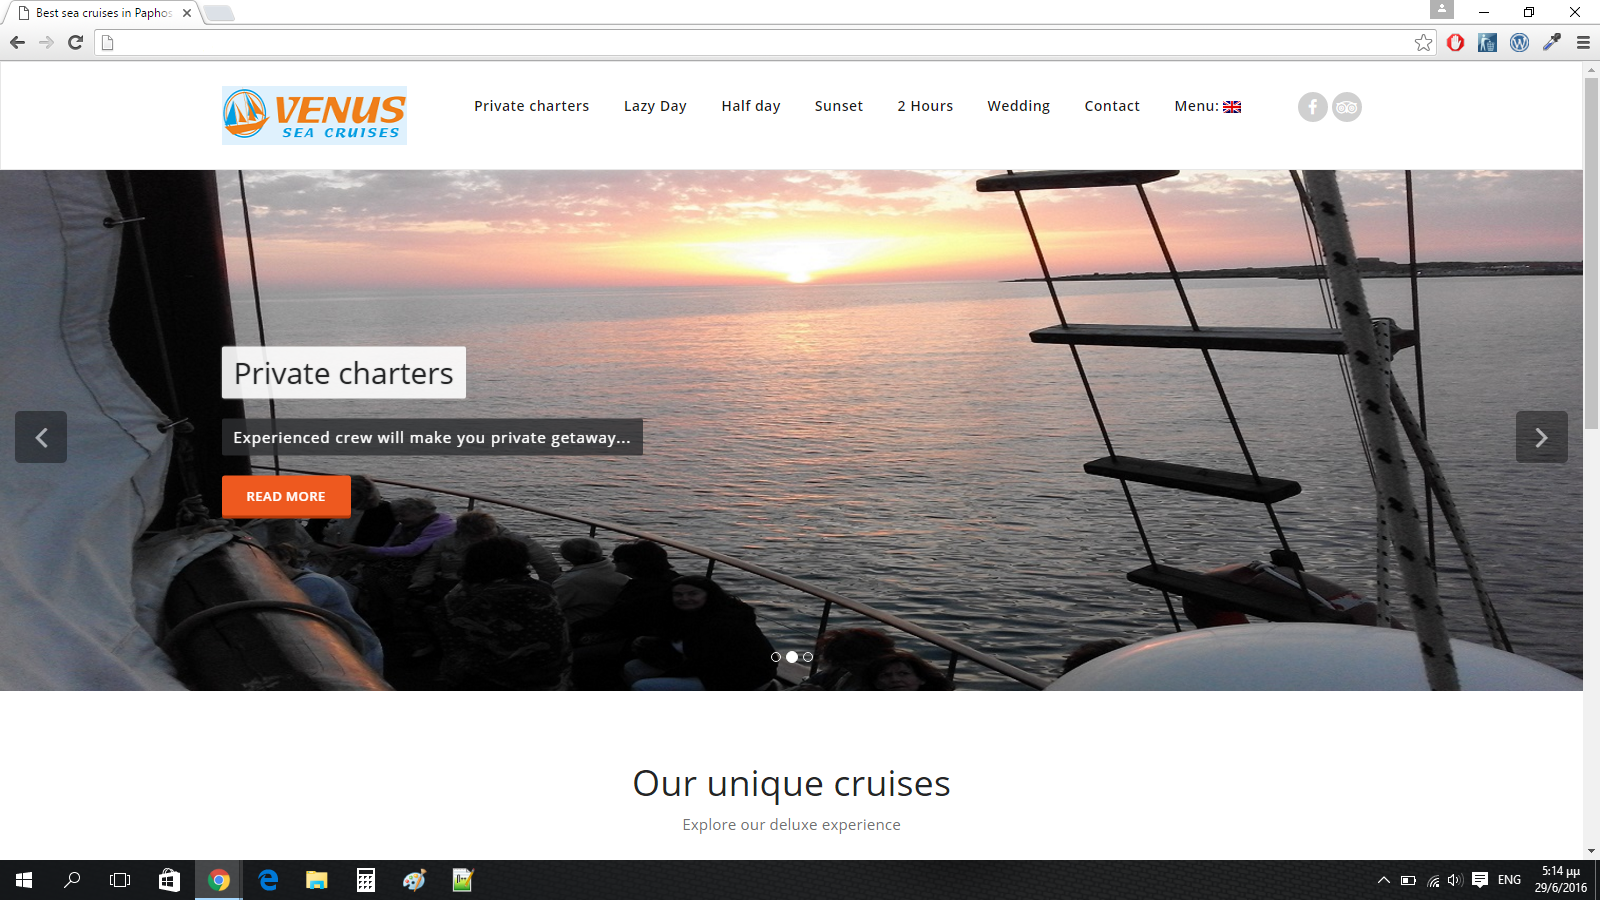 Venus Sea Cruises